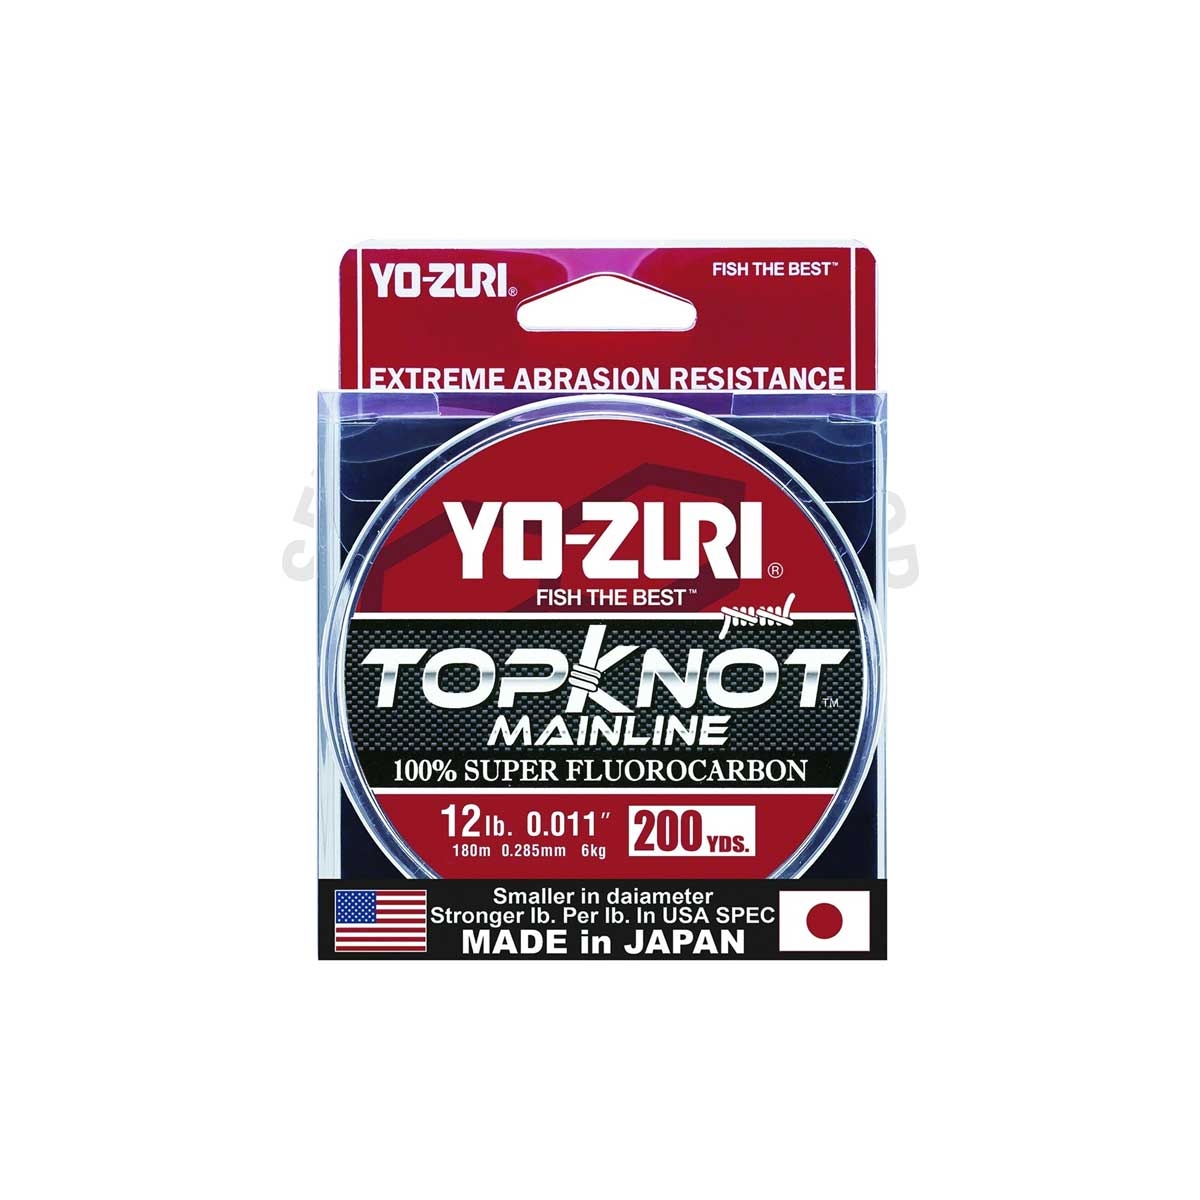 Yo-Zuri Top Knot Mainline 100% Super Fluorocarbon 200yds #R1221